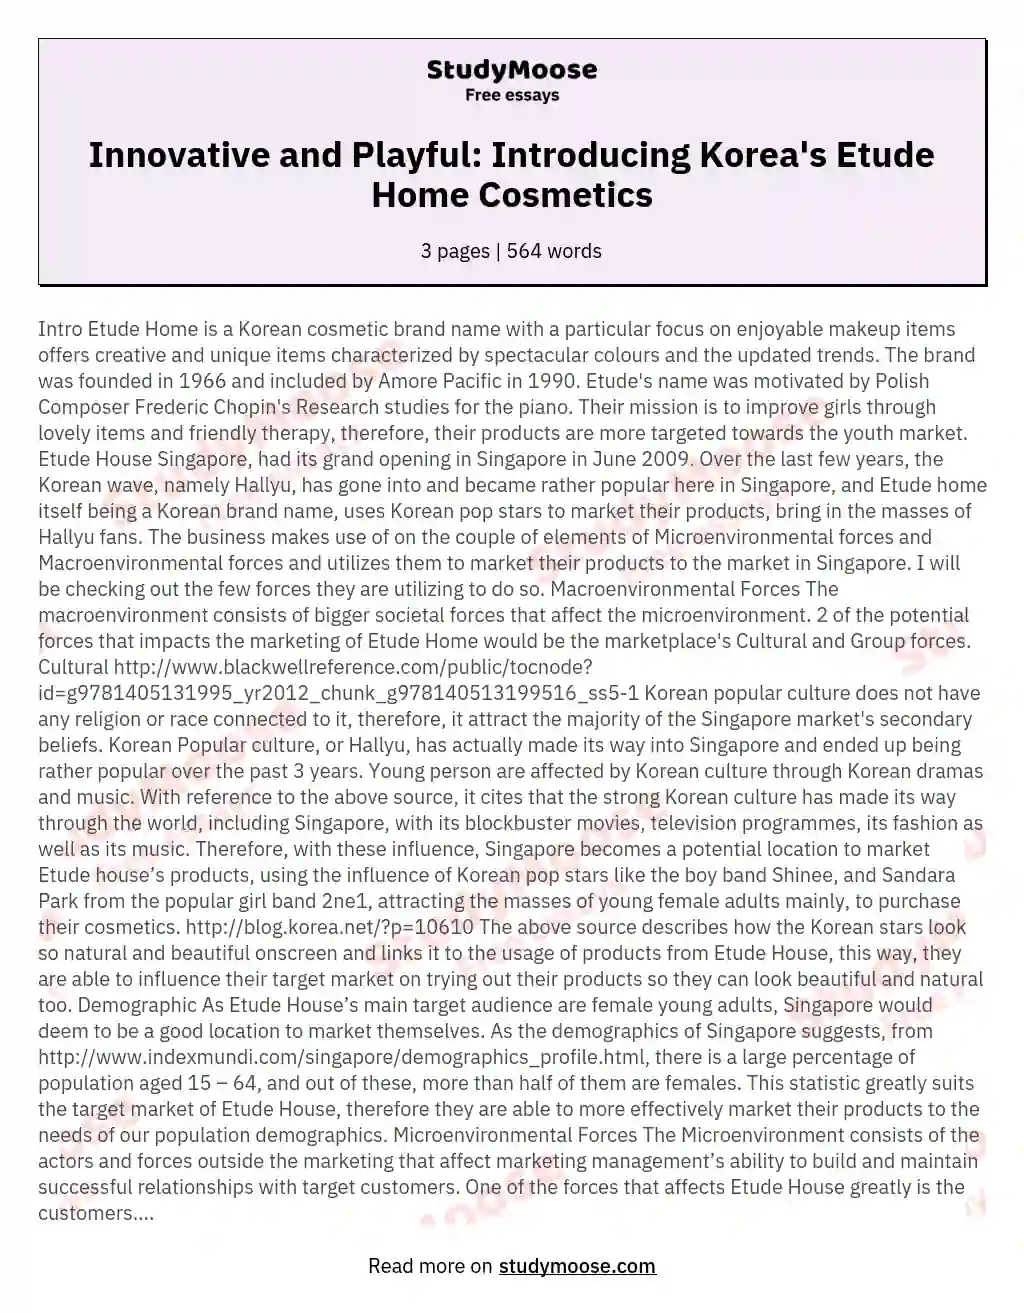 Innovative and Playful: Introducing Korea's Etude Home Cosmetics essay